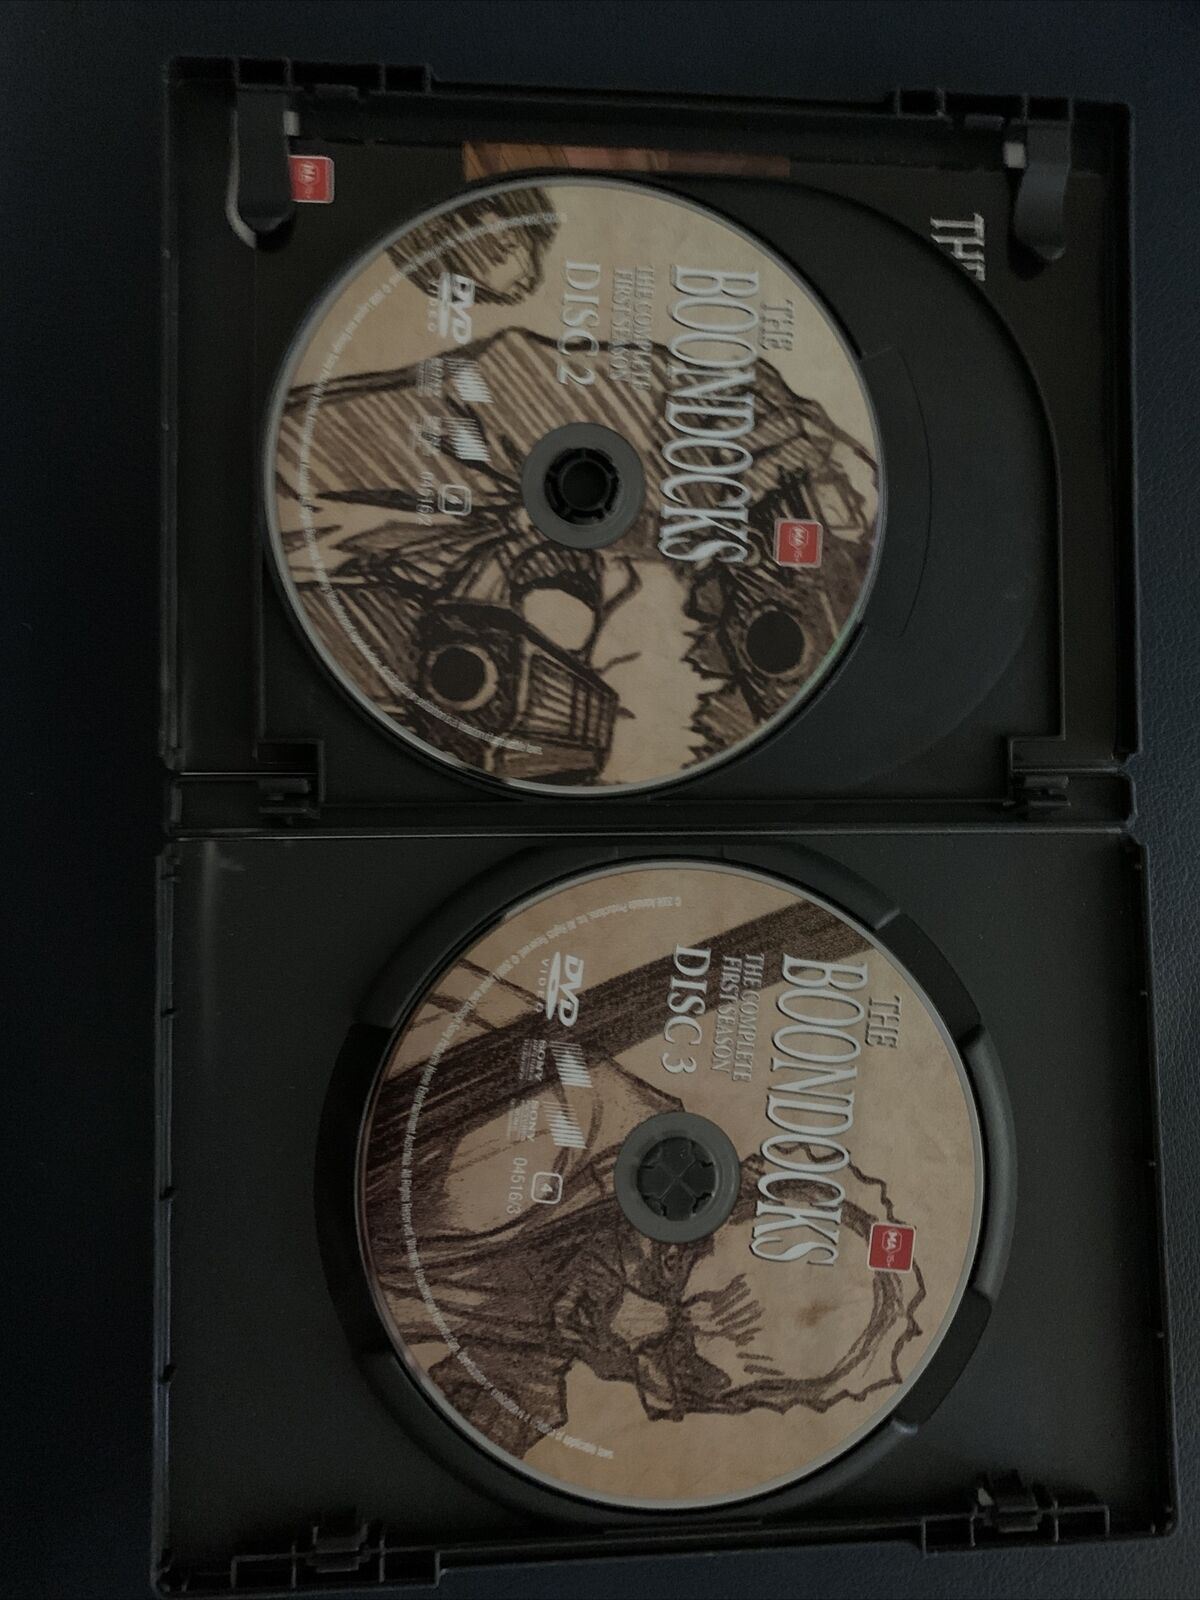 The Boondocks - Season 1 (DVD, 2005) Region 4